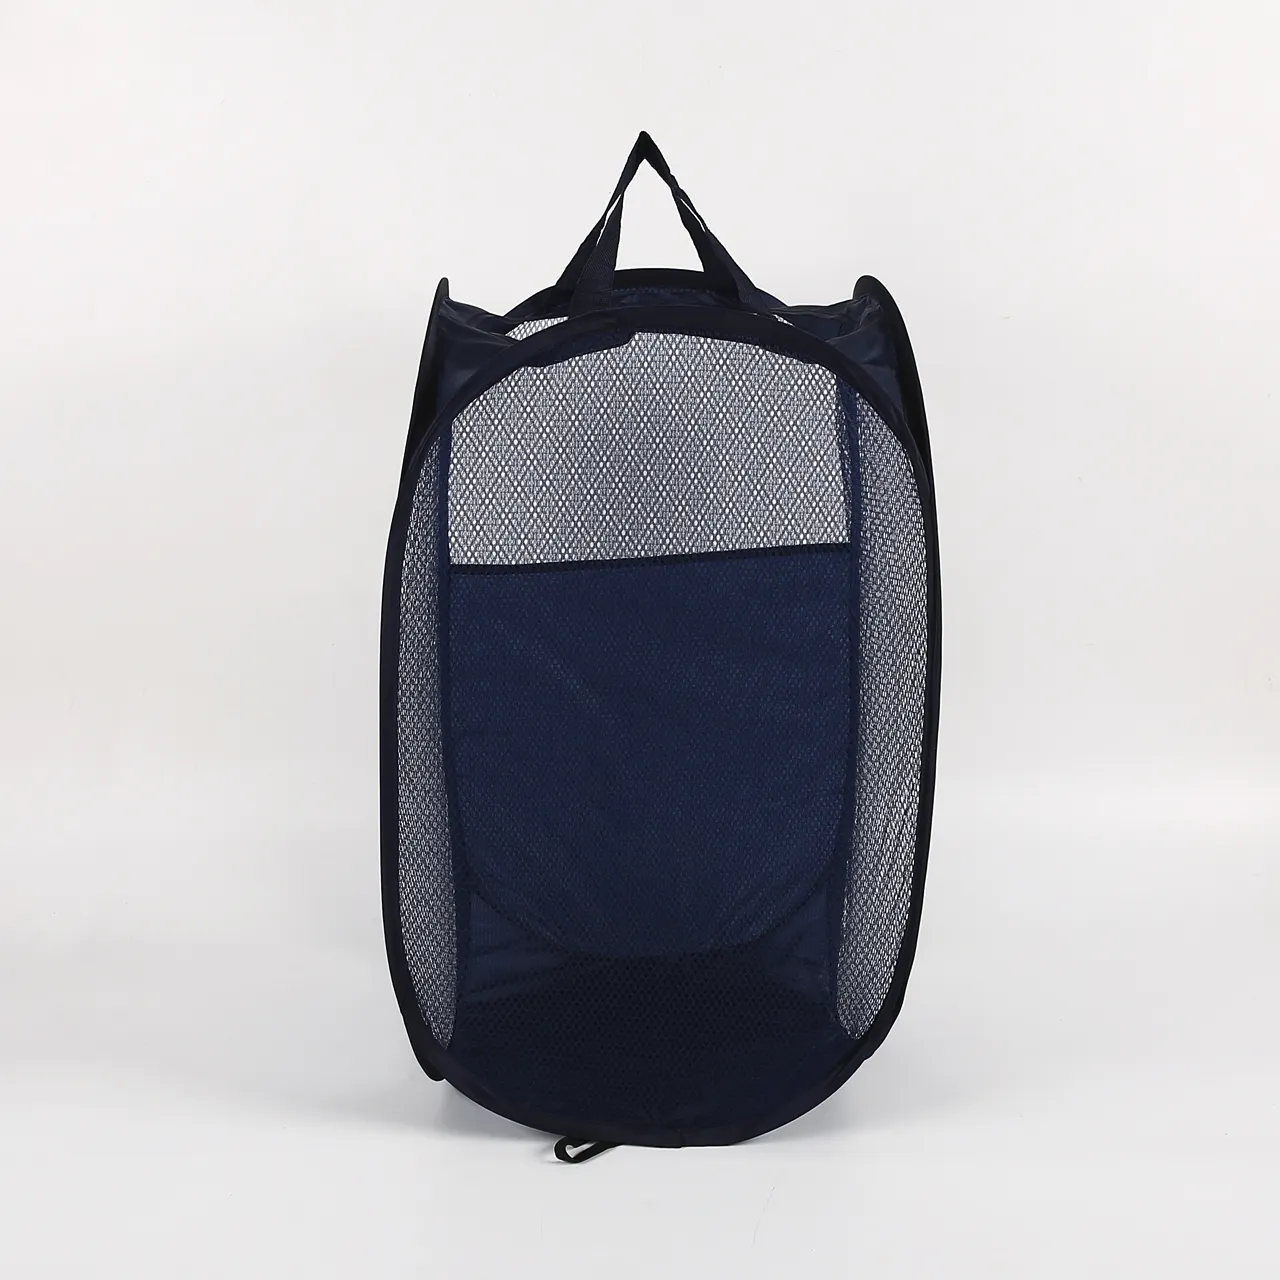 Wholesale large black foldable pop up laundry hamper basket mesh storage bag with handle